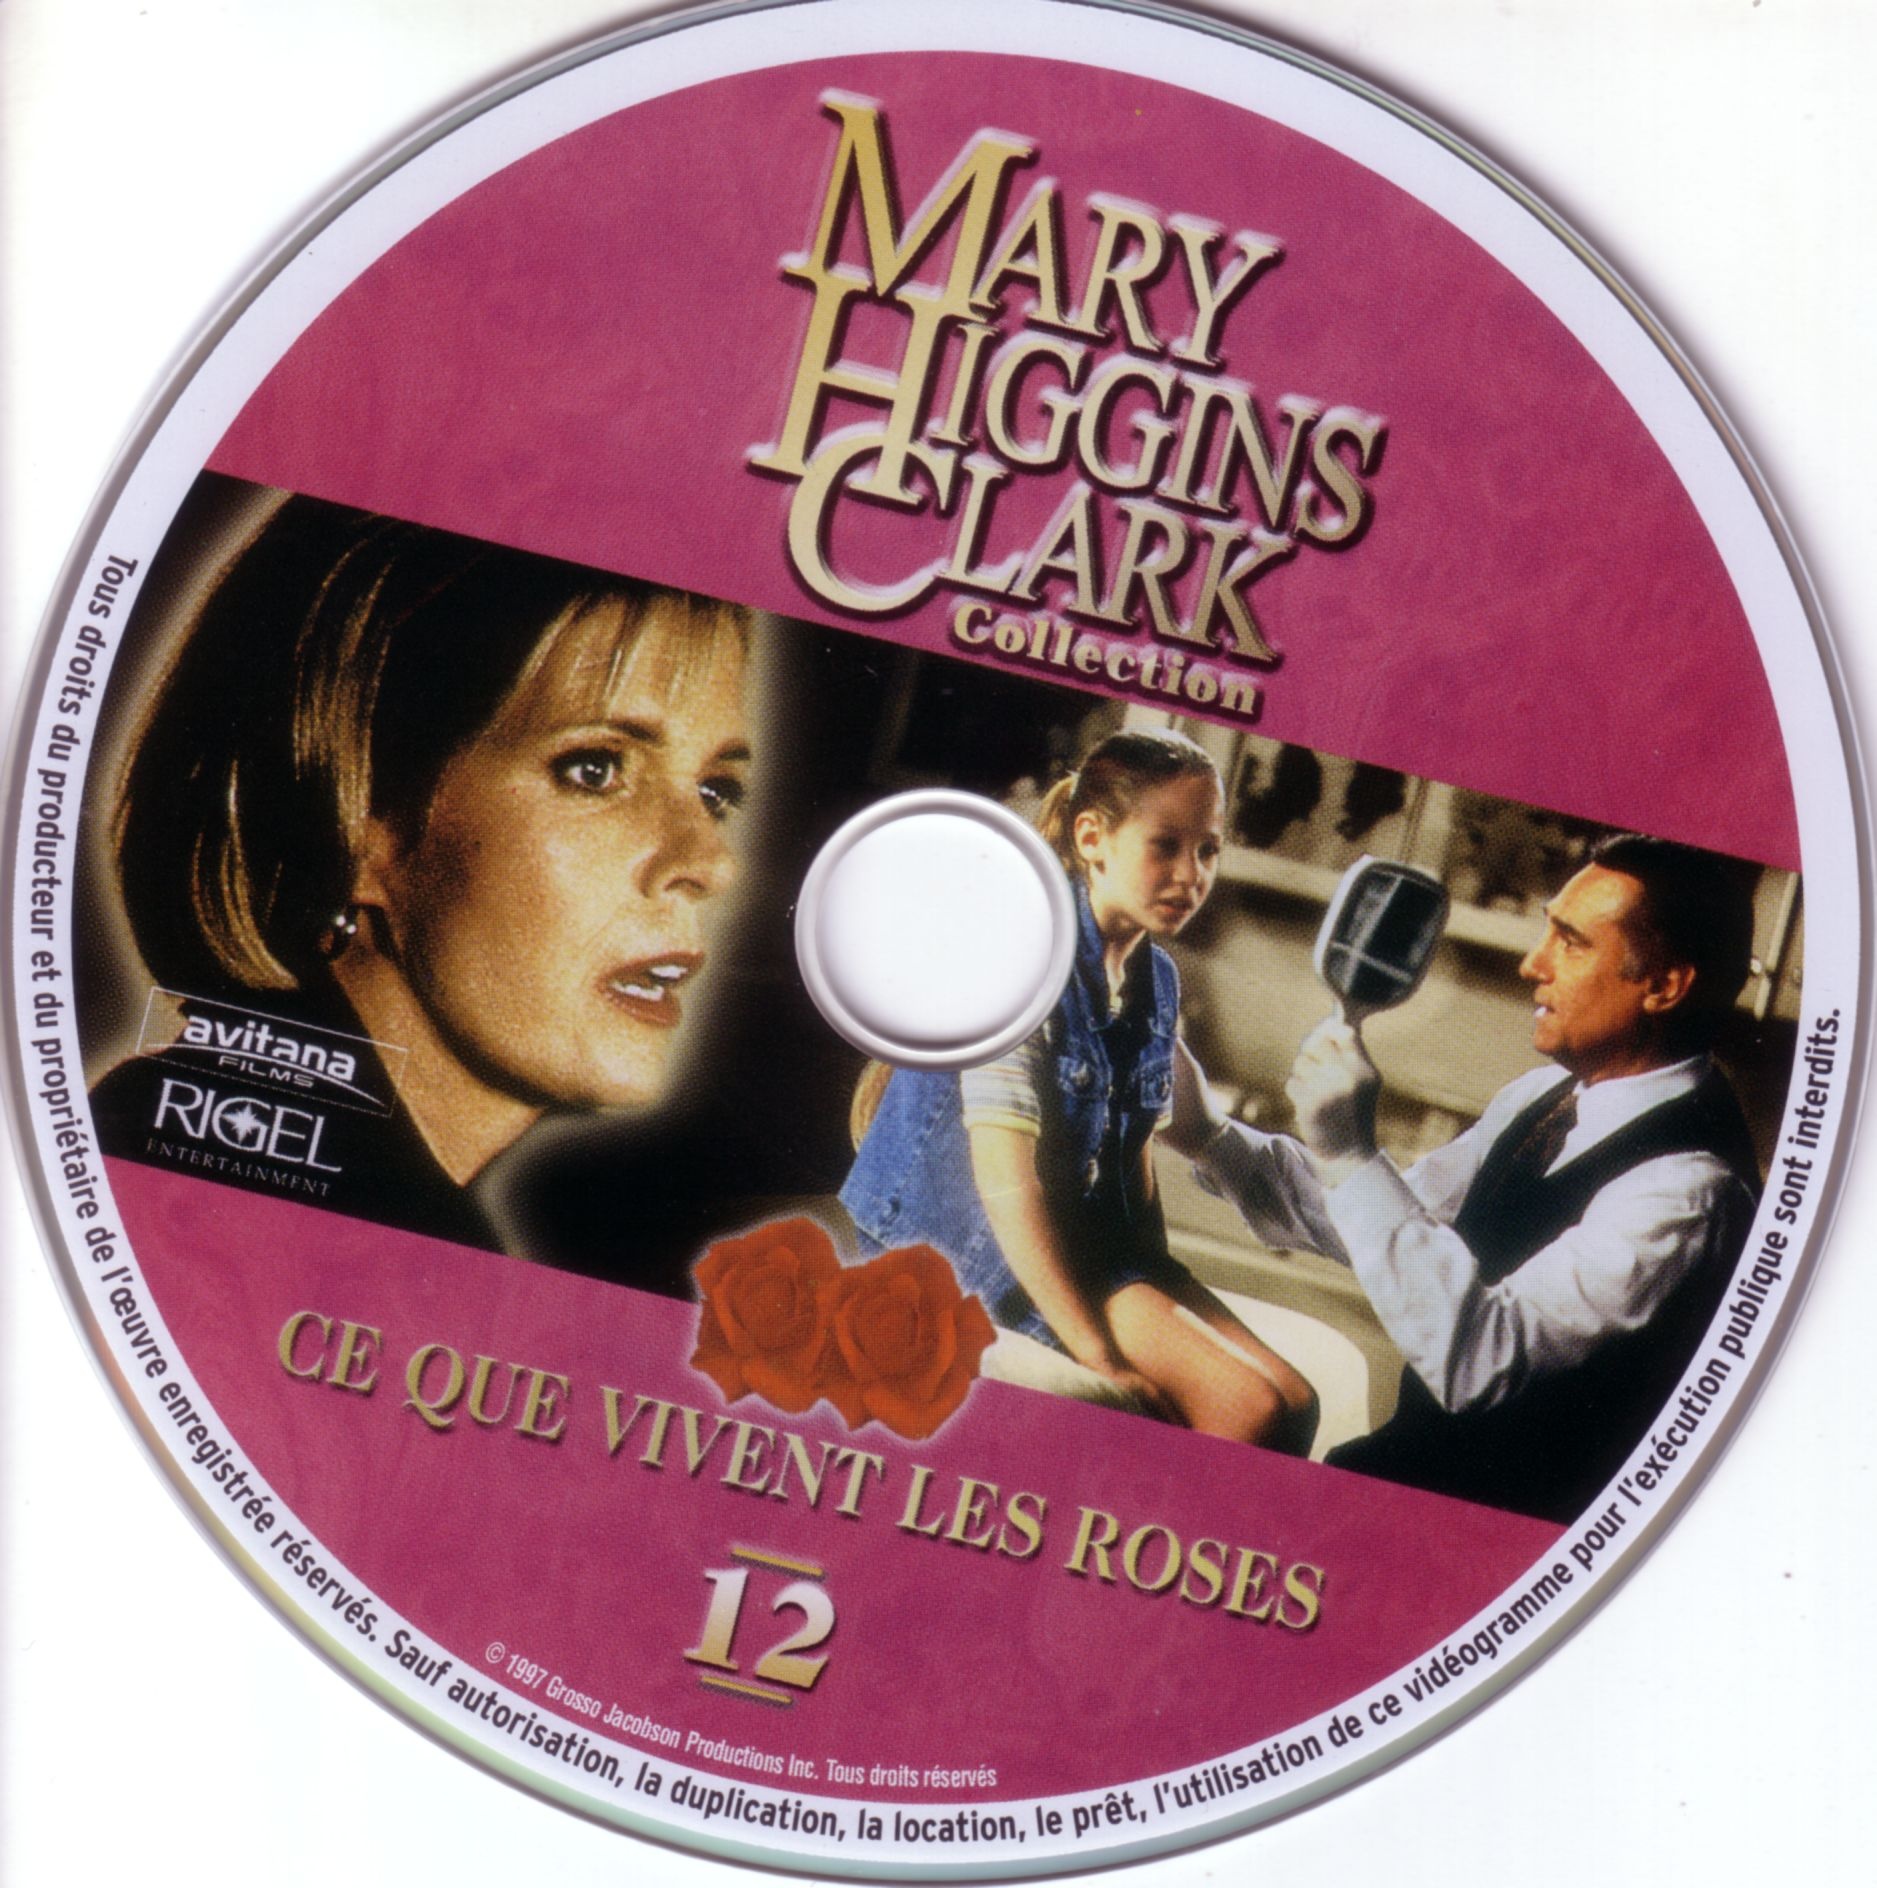 Mary Higgins Clark vol 12 - Ce que vivent les Roses